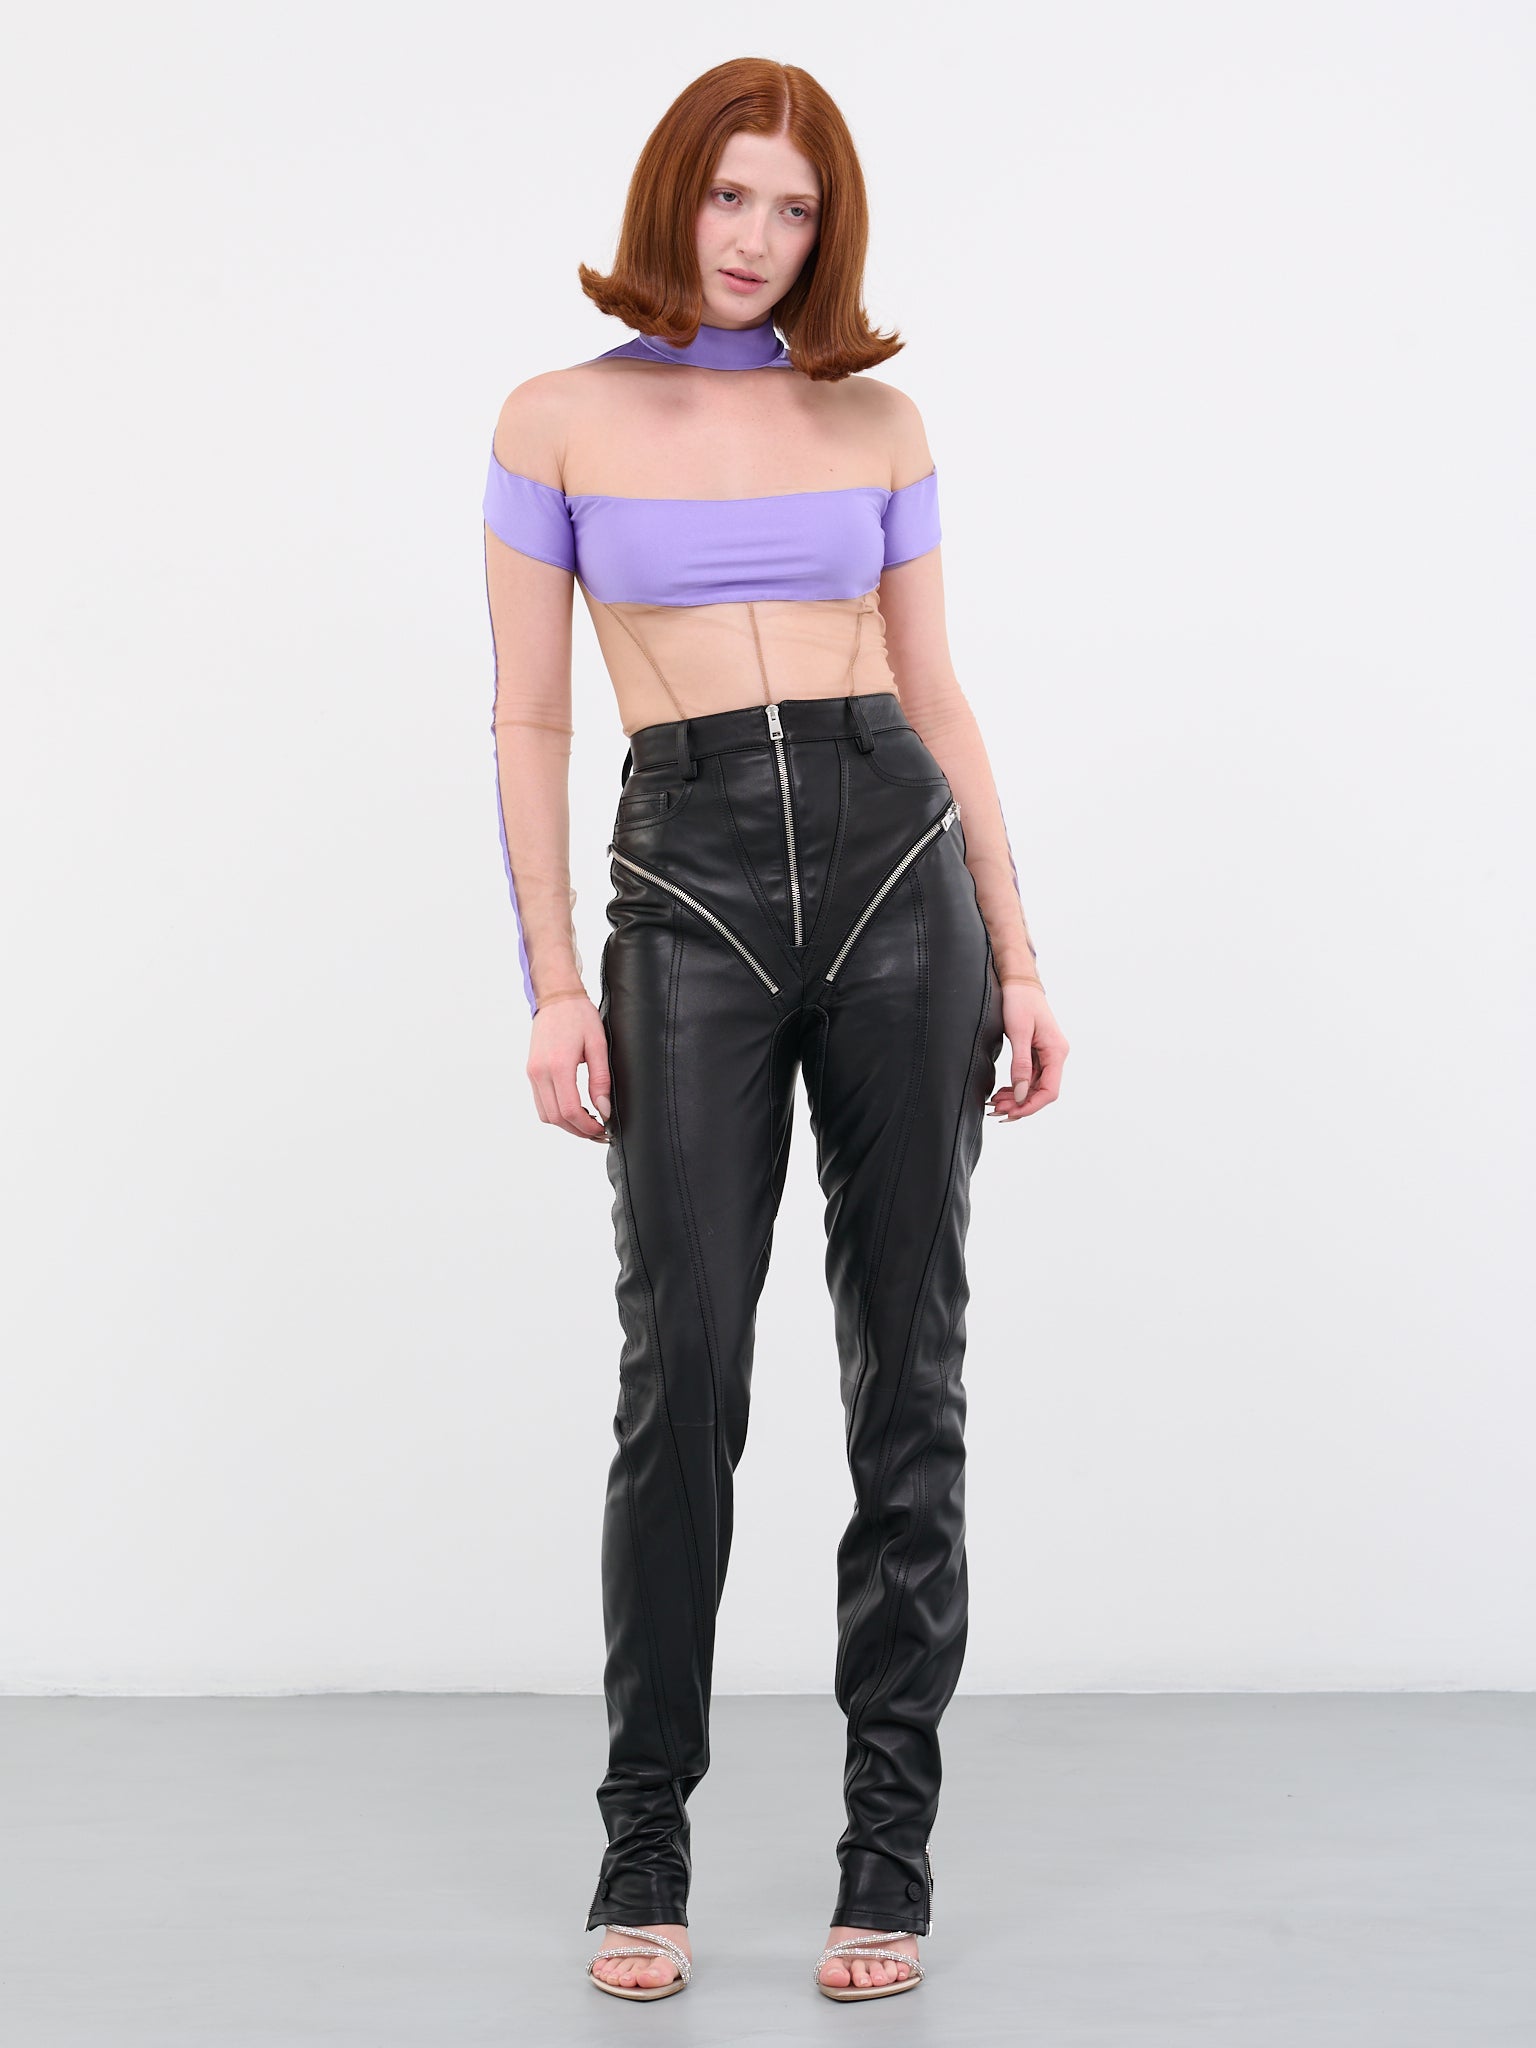 Mugler Illusion Stretch Bodysuit in Lilac & Nude 02, Purple. Size 34 (also  in ).